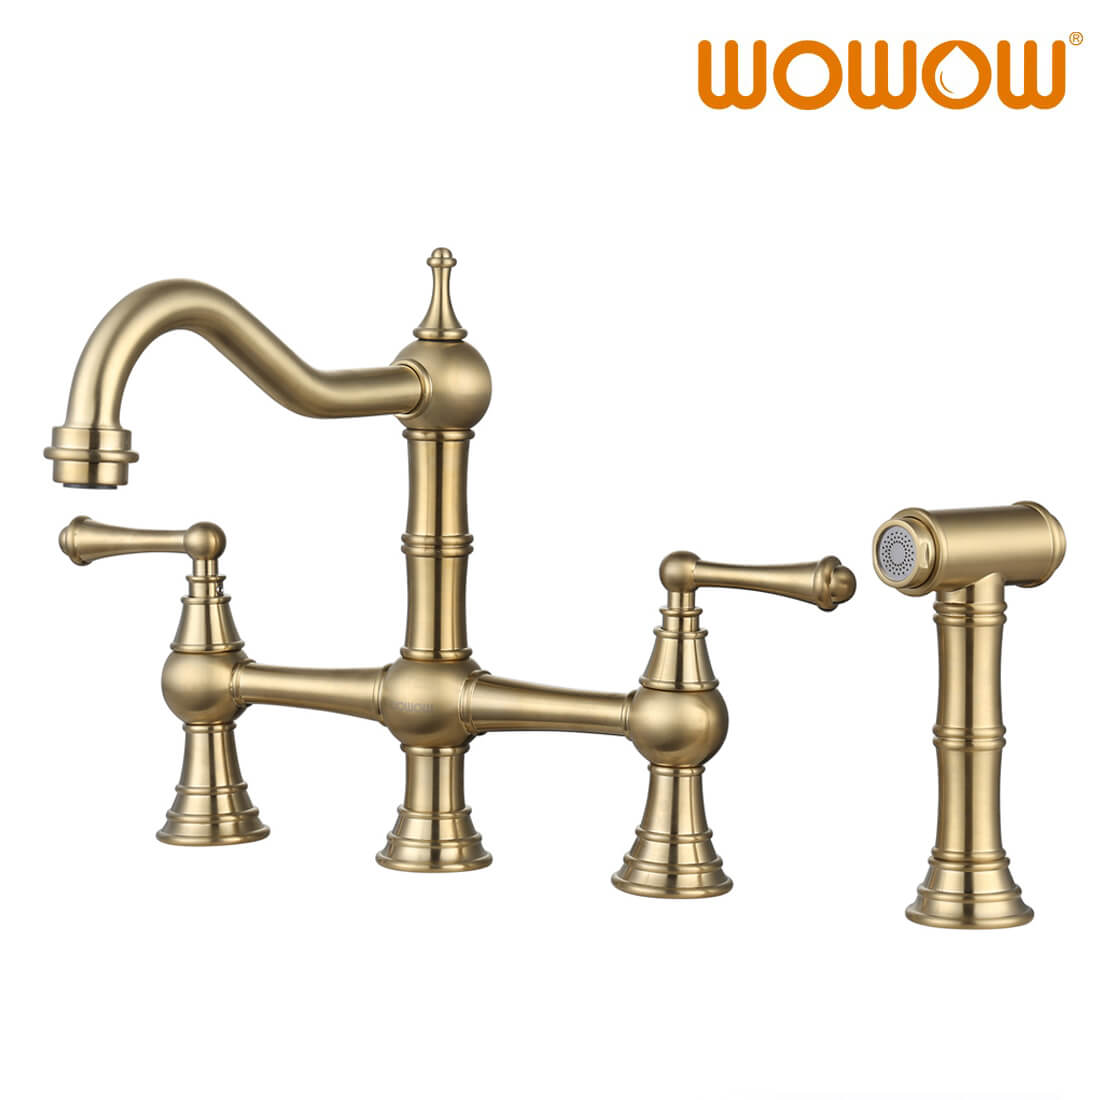 wowow bridge kitchen faucet brass with side sprayer 0